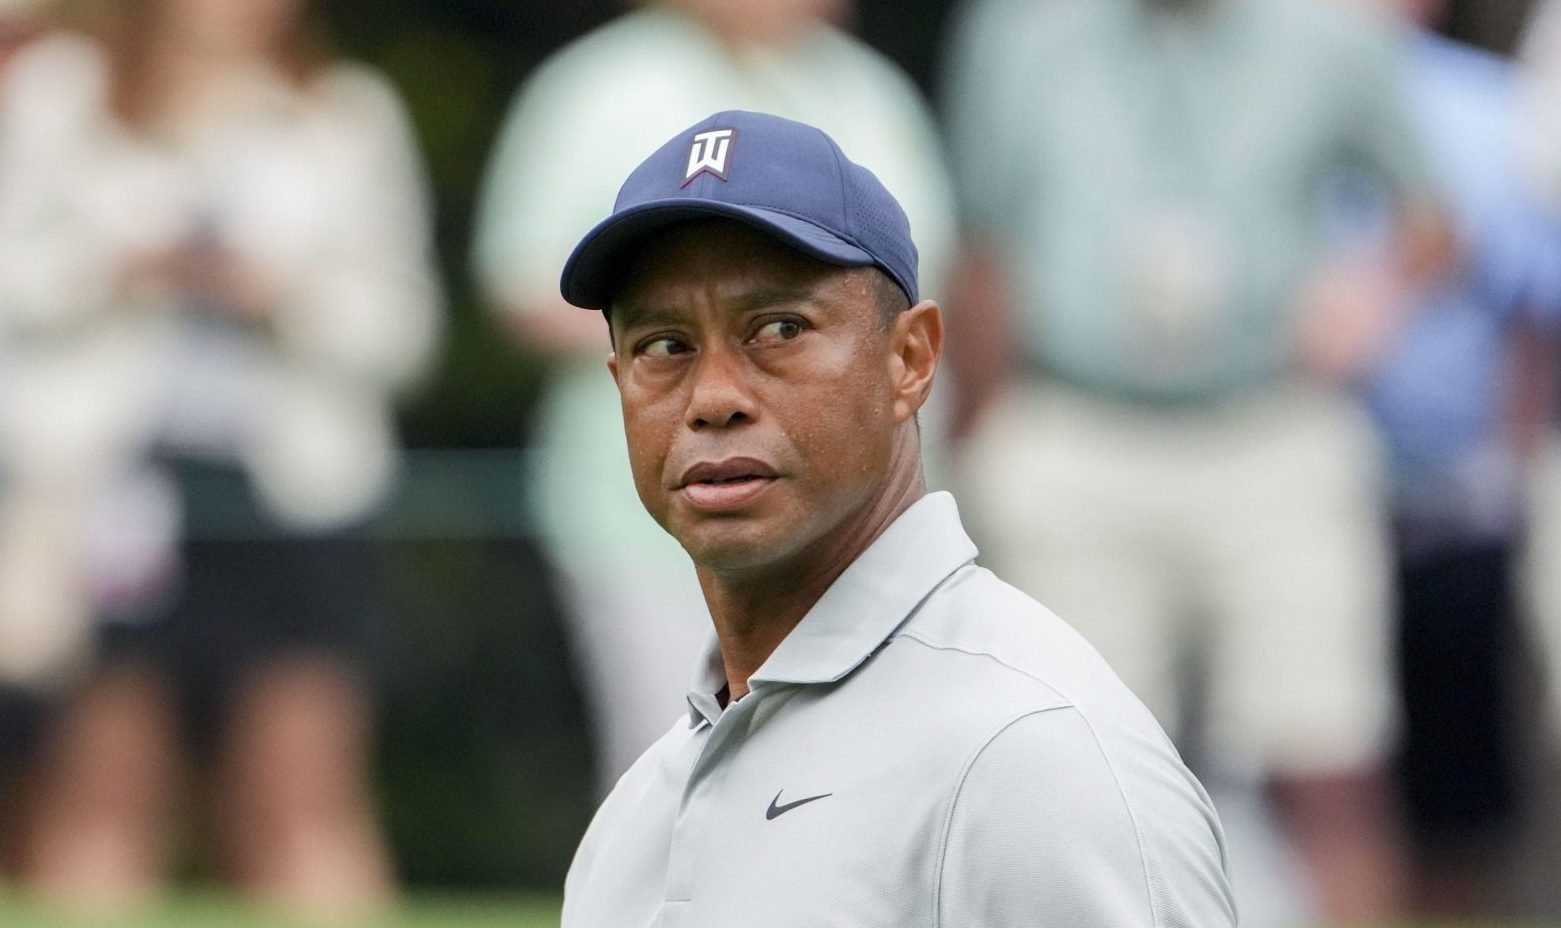 World reacts to Tiger Woods, LIV Golf news